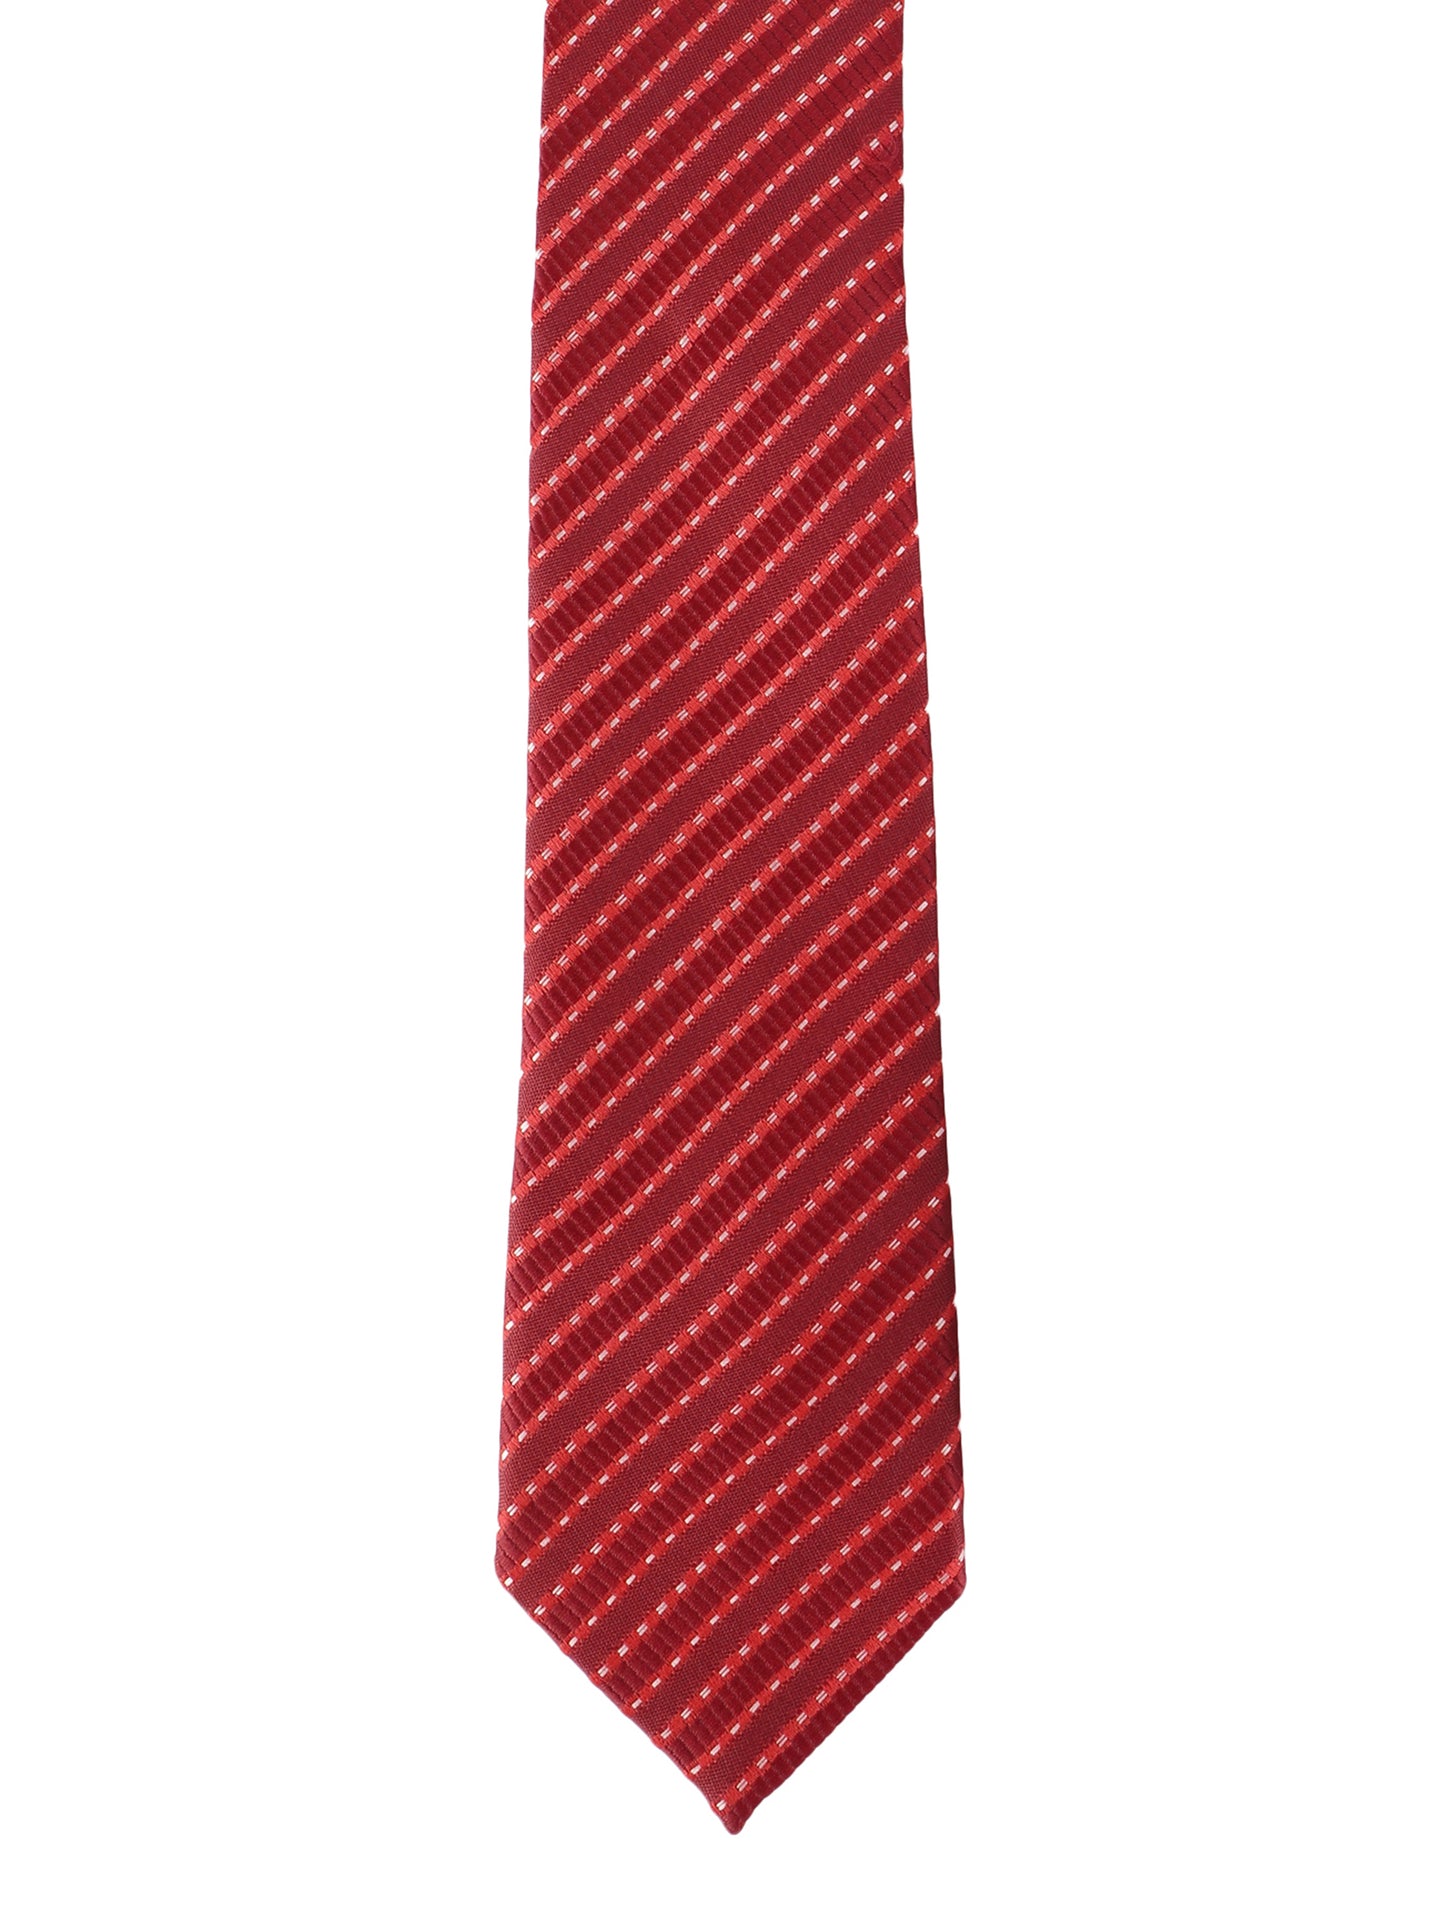 Alvaro Castagnino Microfiber RED  Colored Necktie for Men